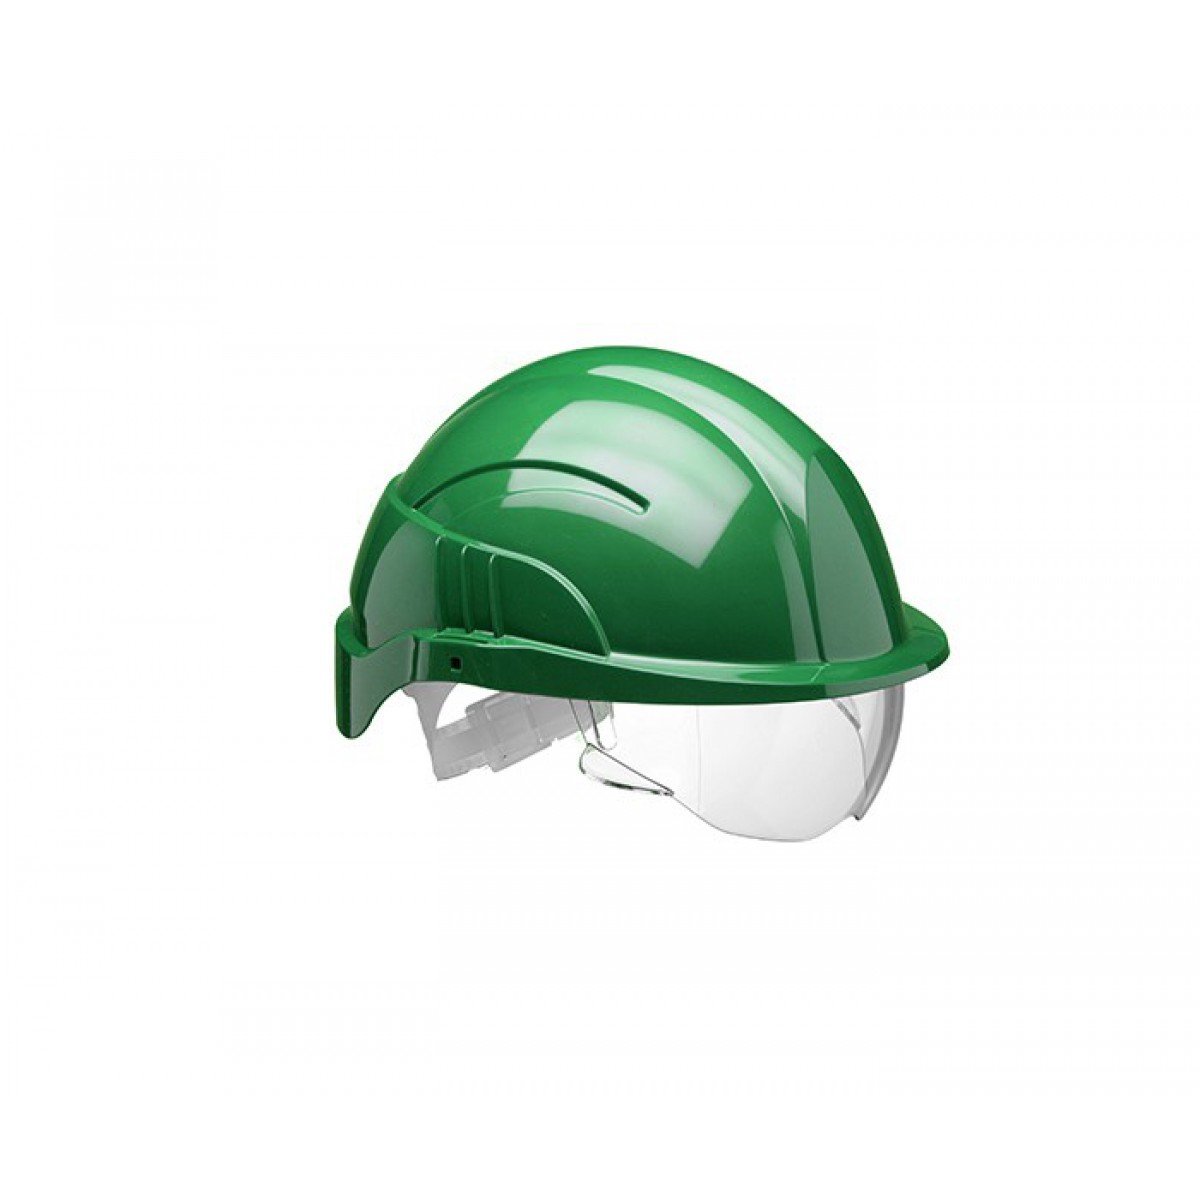 Centurion Vision Plus Safety Helmet with Ratchet Green